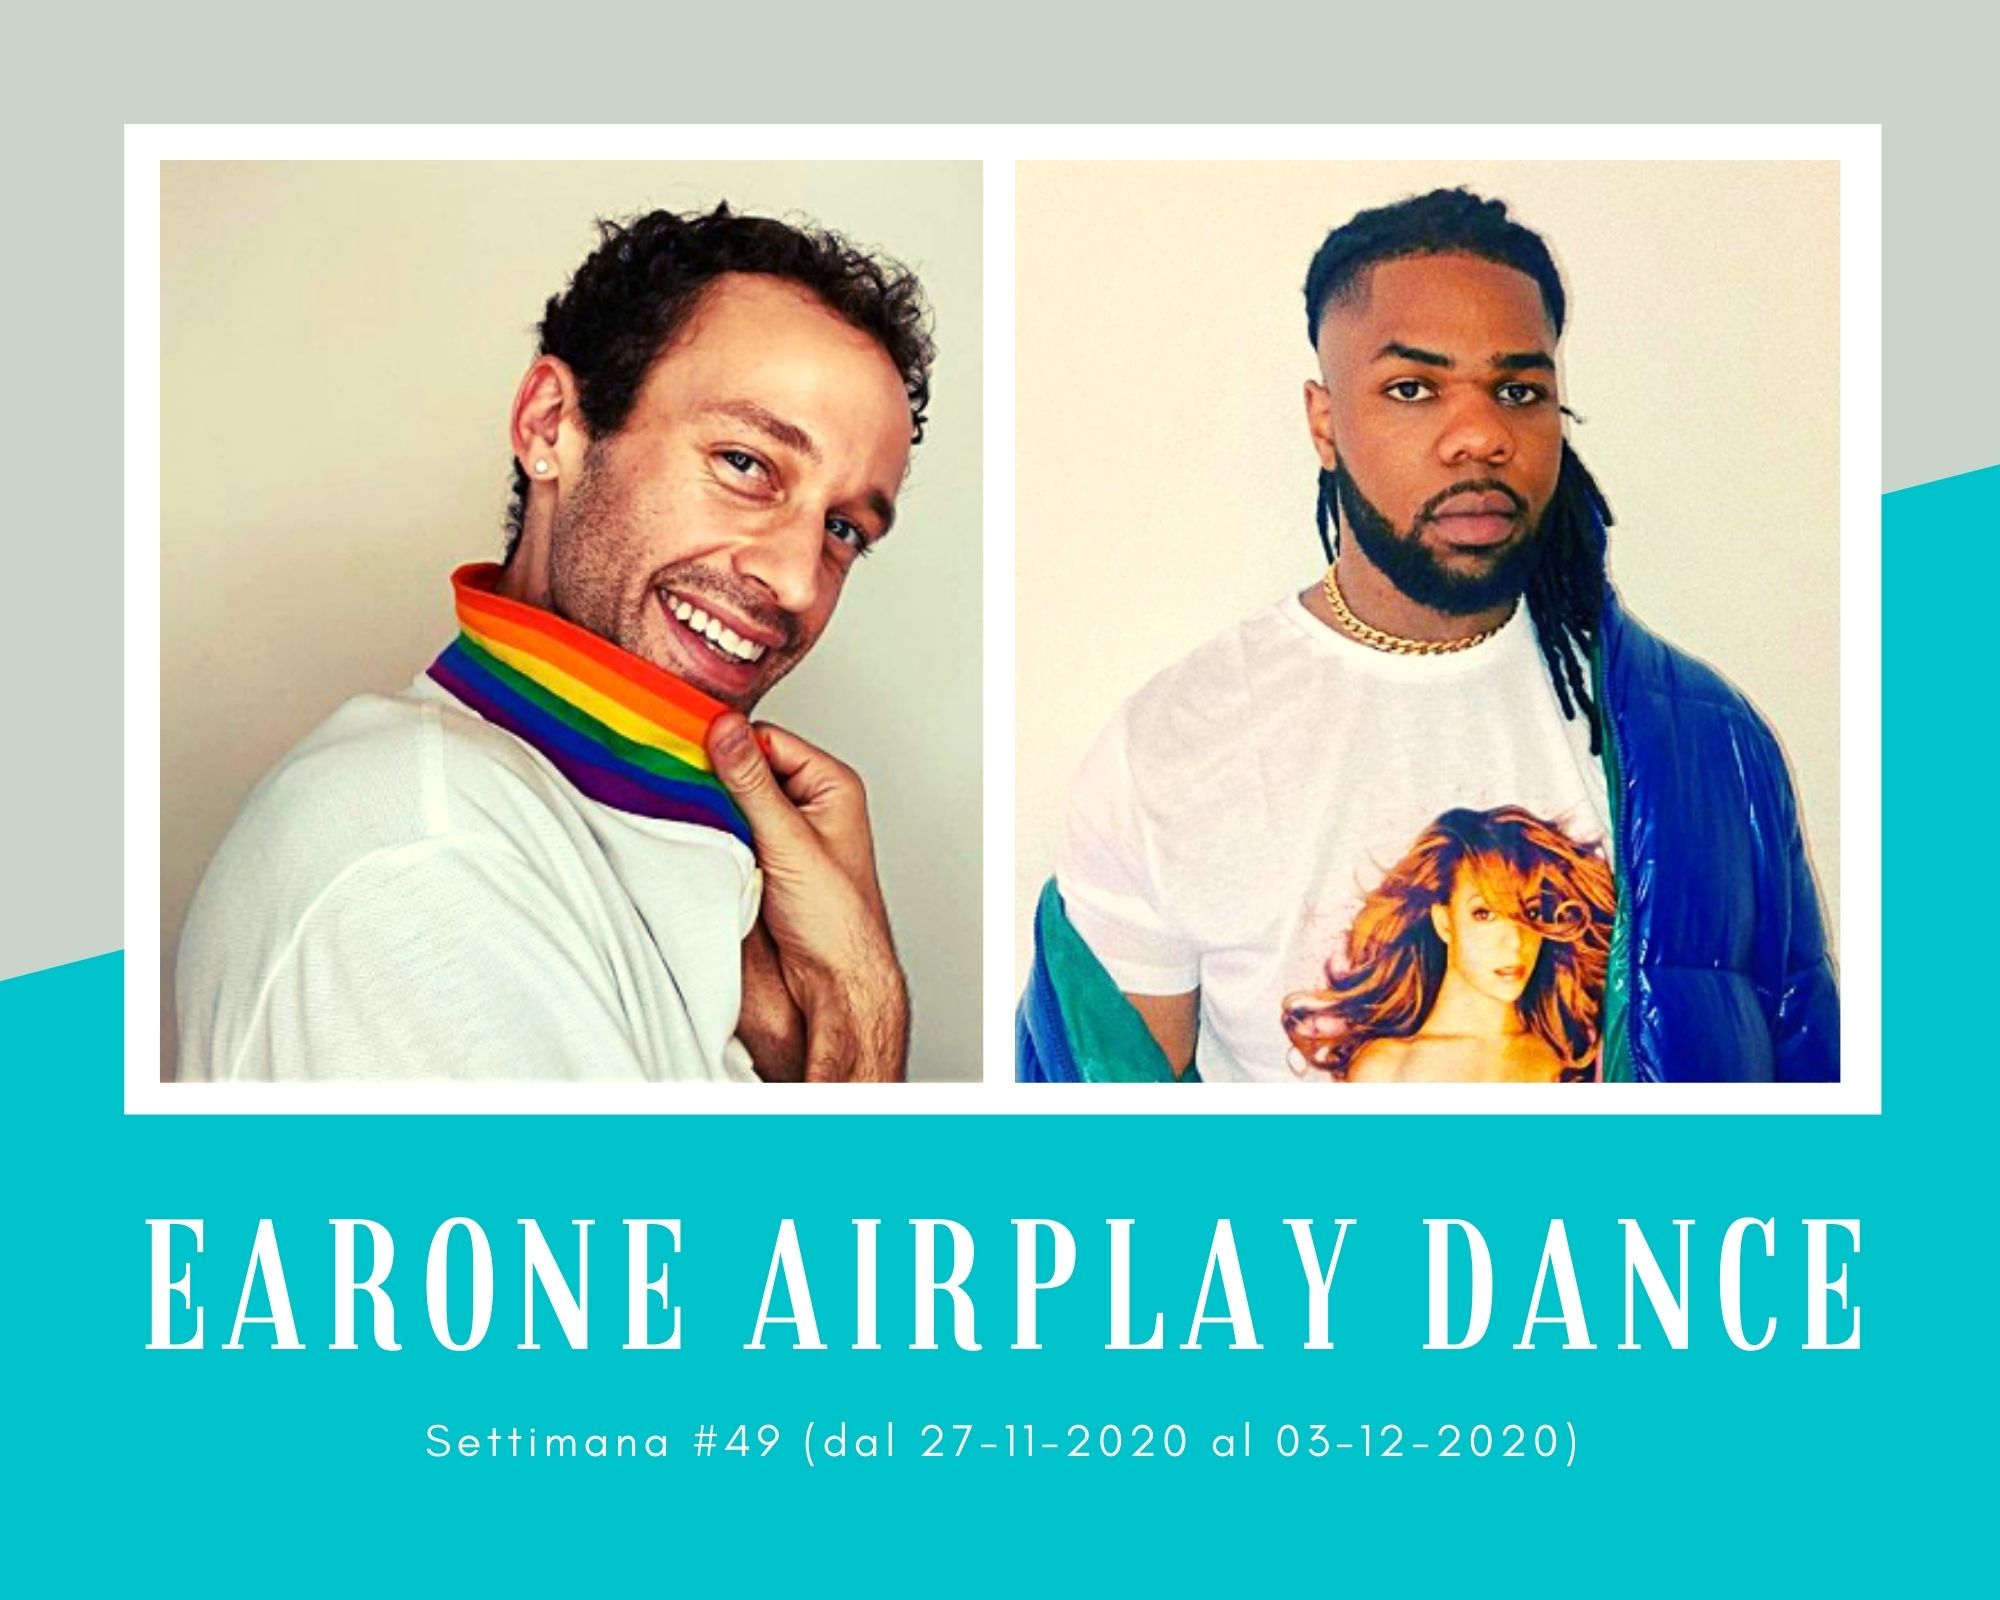 Classifica Radio EARONE Airplay Dance, week 49. Si balla con Dotan, Mnek e Wrabel, cantanti apertamente gay